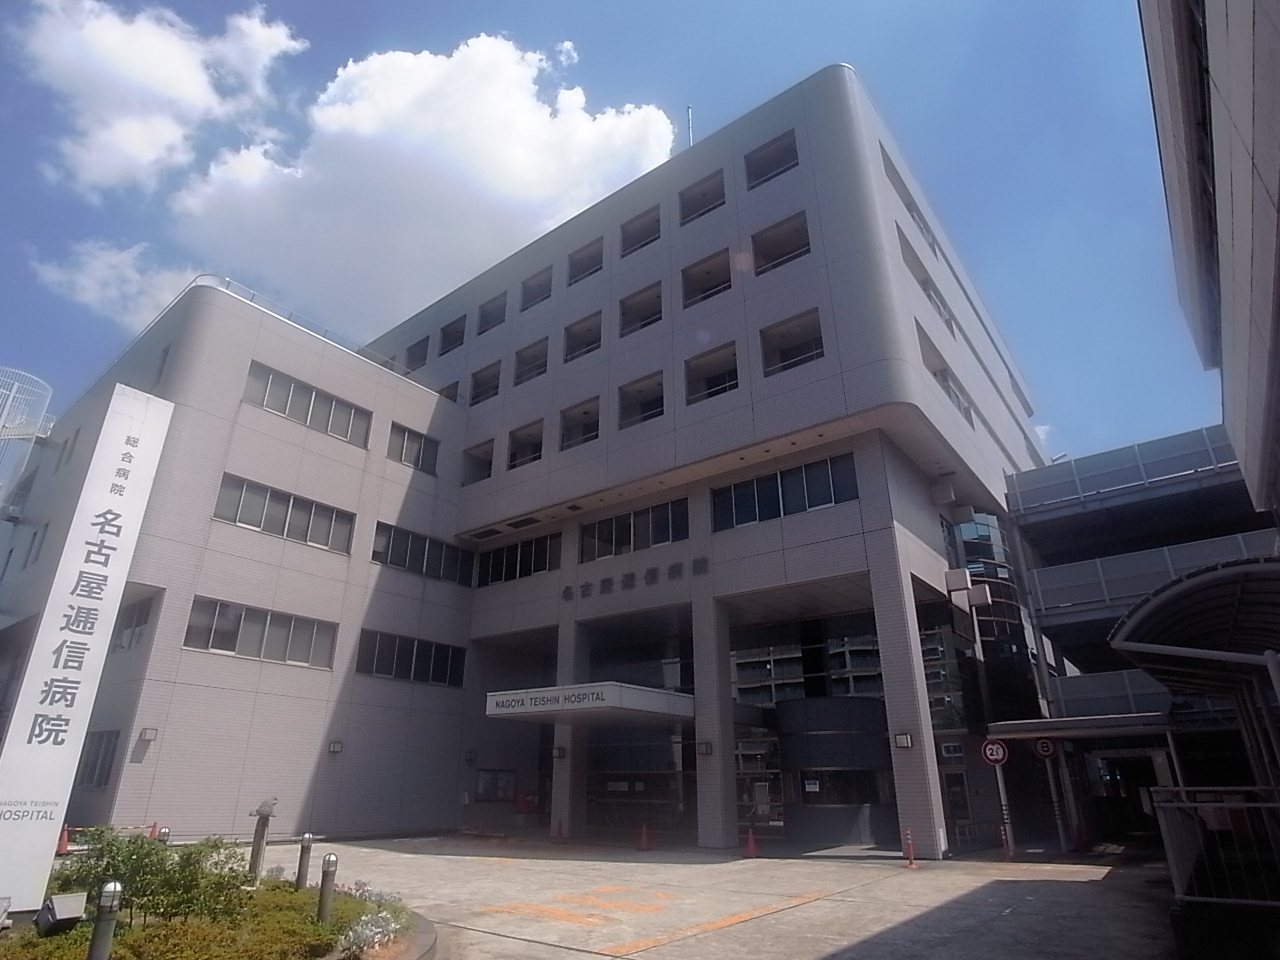 Hospital. 310m to Nagoya the Communications Hospital (General Hospital) (hospital)